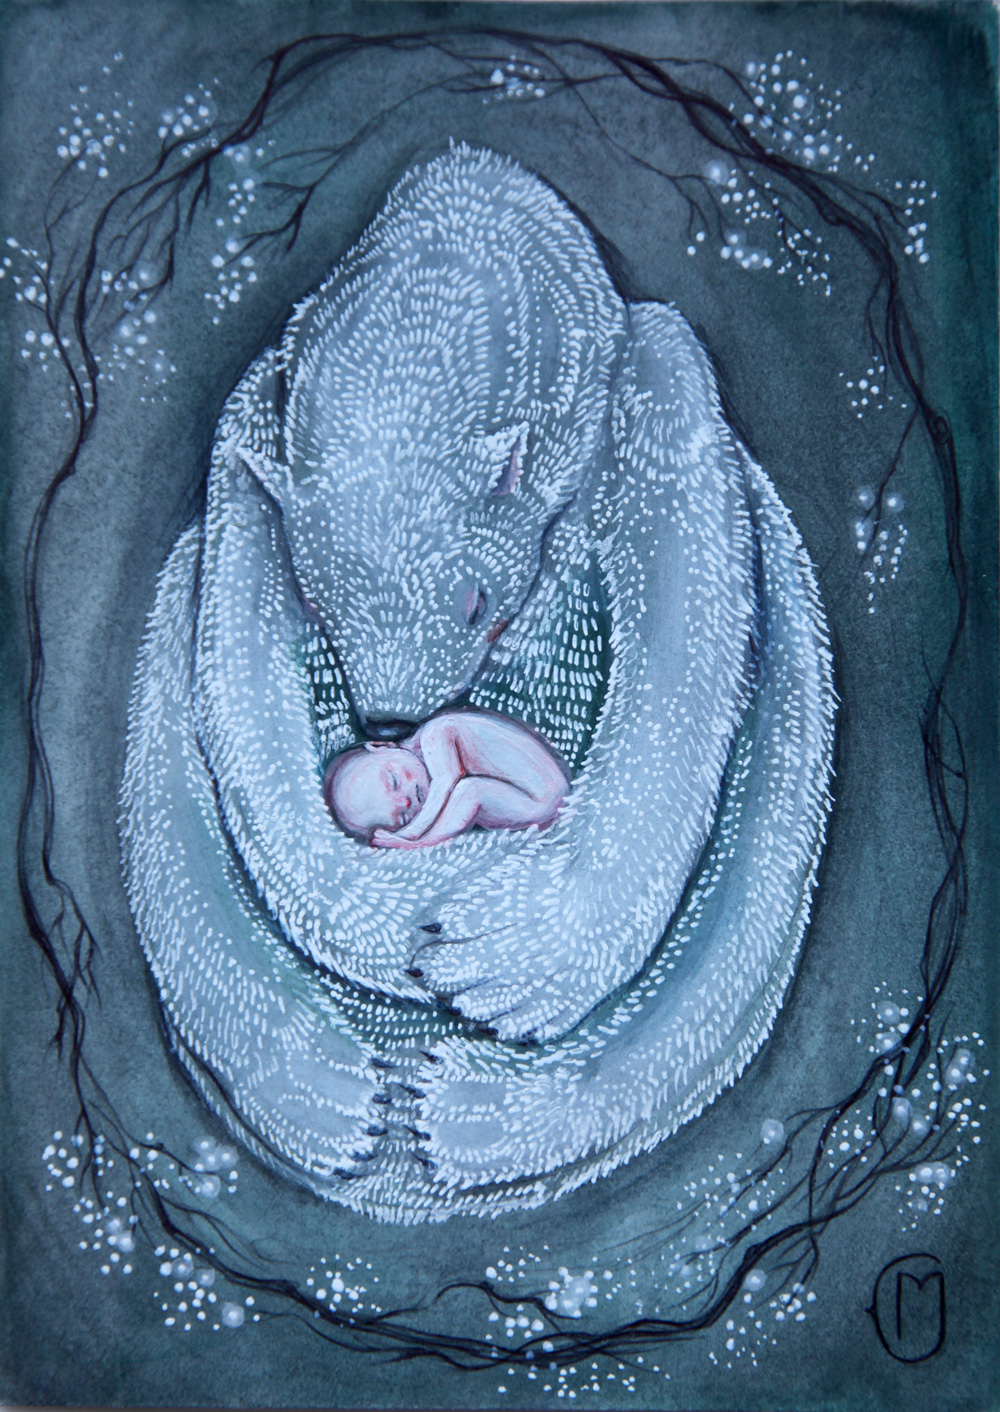 acrylic  ink  arches watercolourpaper  Cute  cozy  polarbear  bear  baby  sleeping